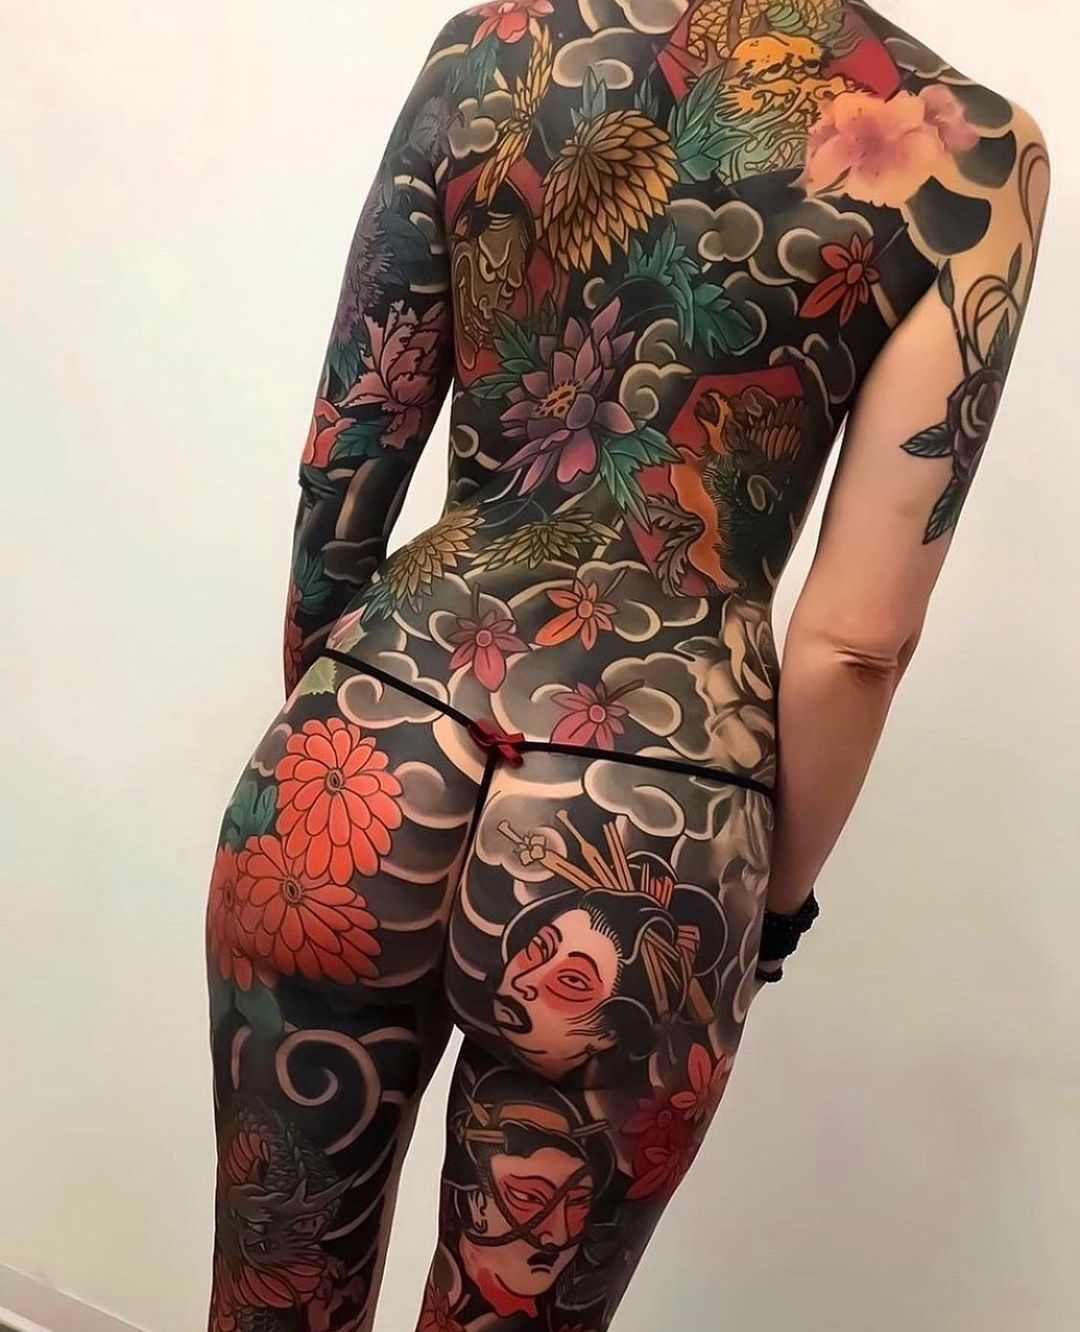 Gorgeous Japanese Bodysuit Tattoo By © Alessio Ventimiglia.